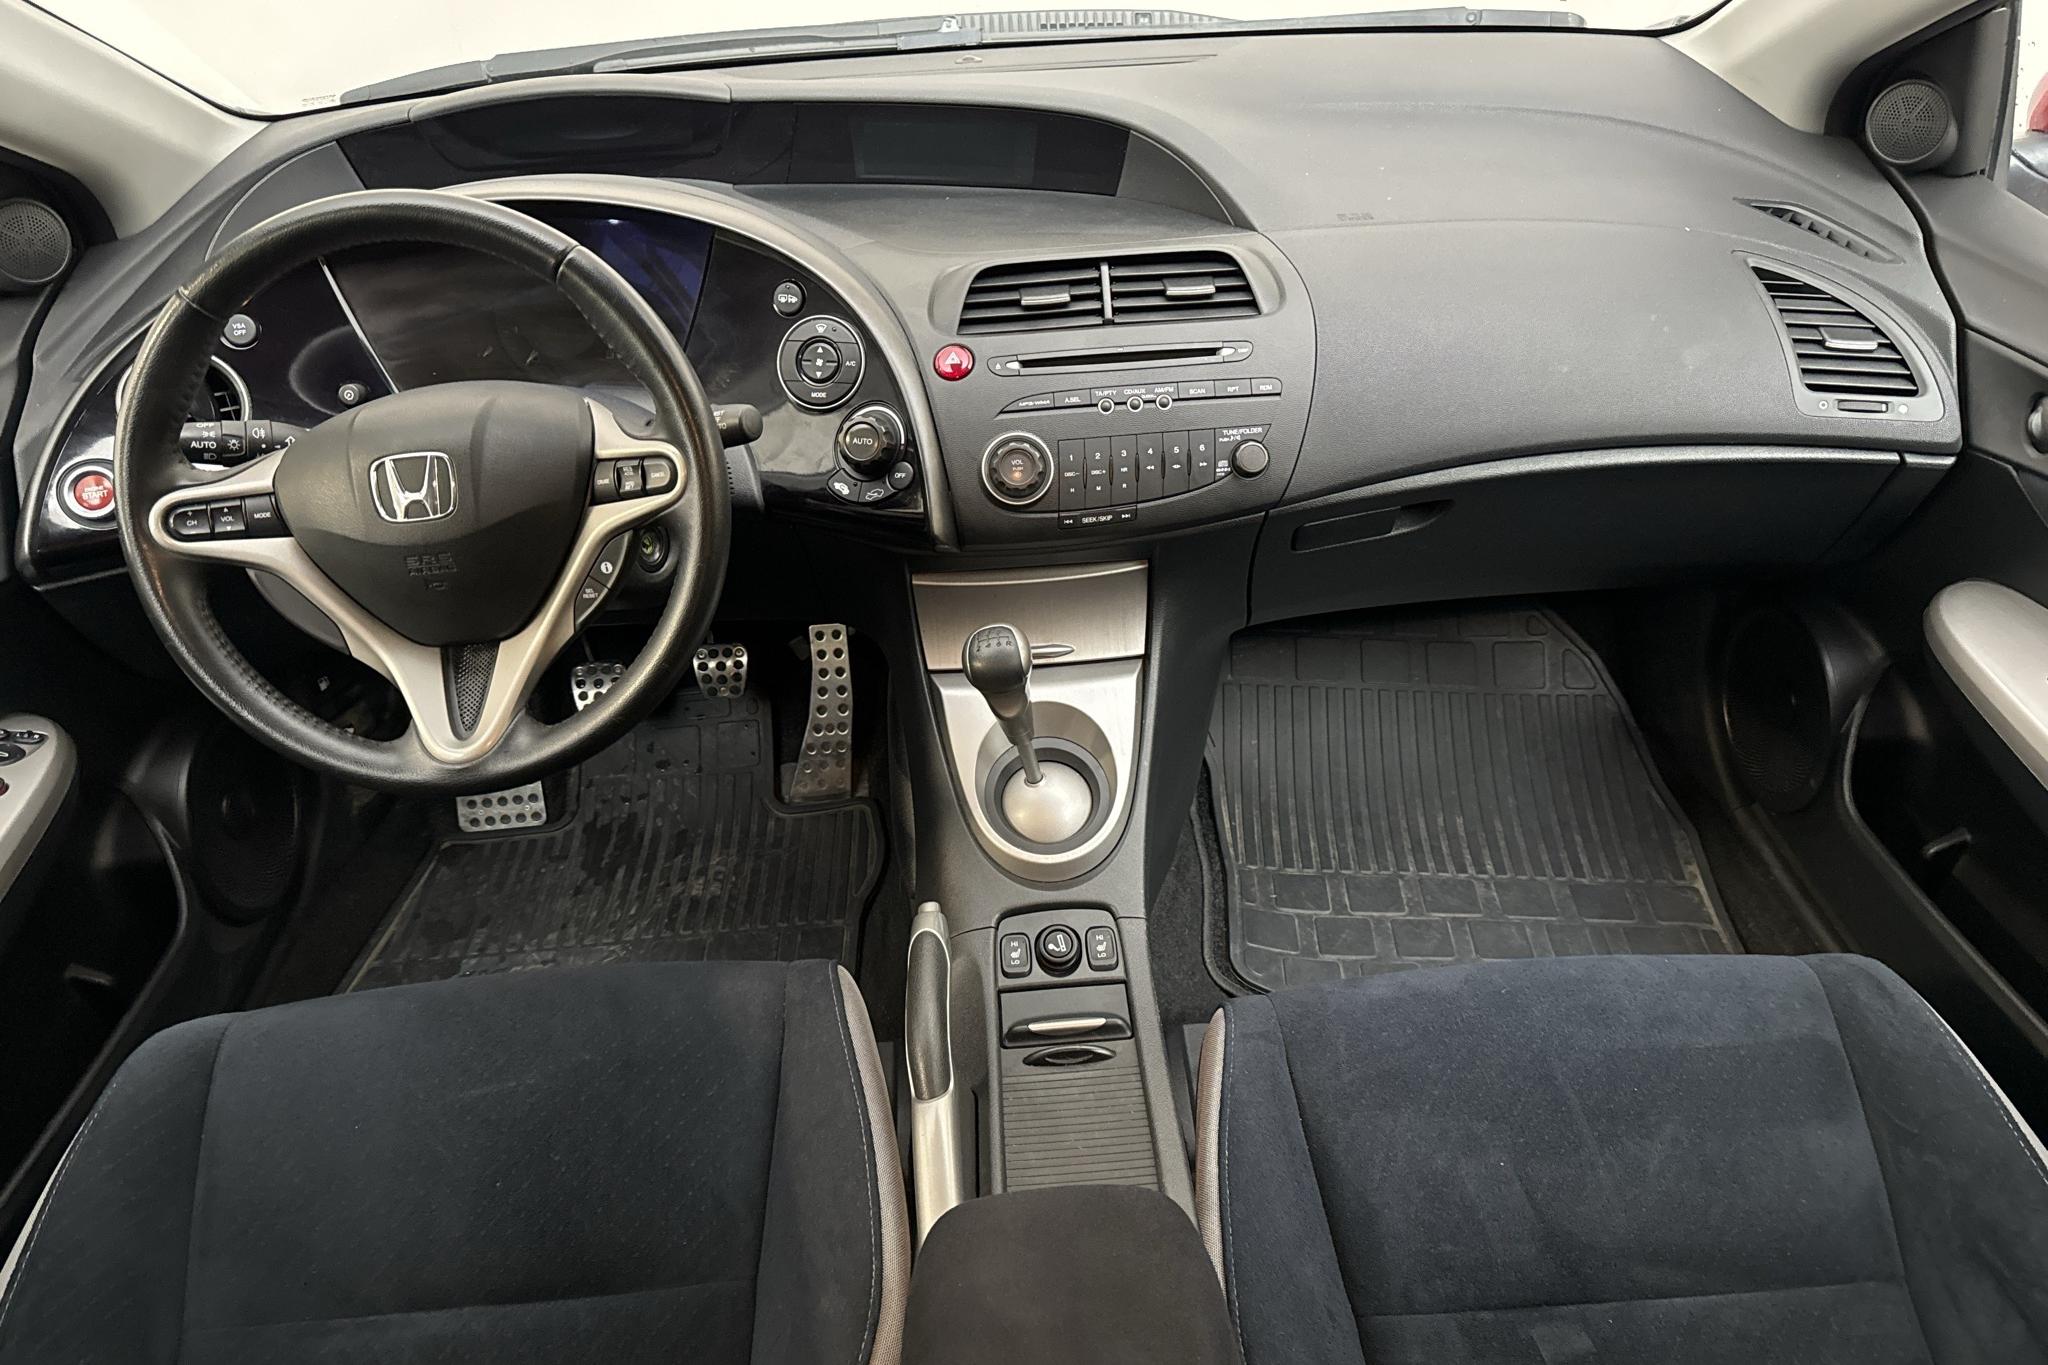 Honda Civic 1.8 5dr (140hk) - 10 244 mil - Manuell - röd - 2007